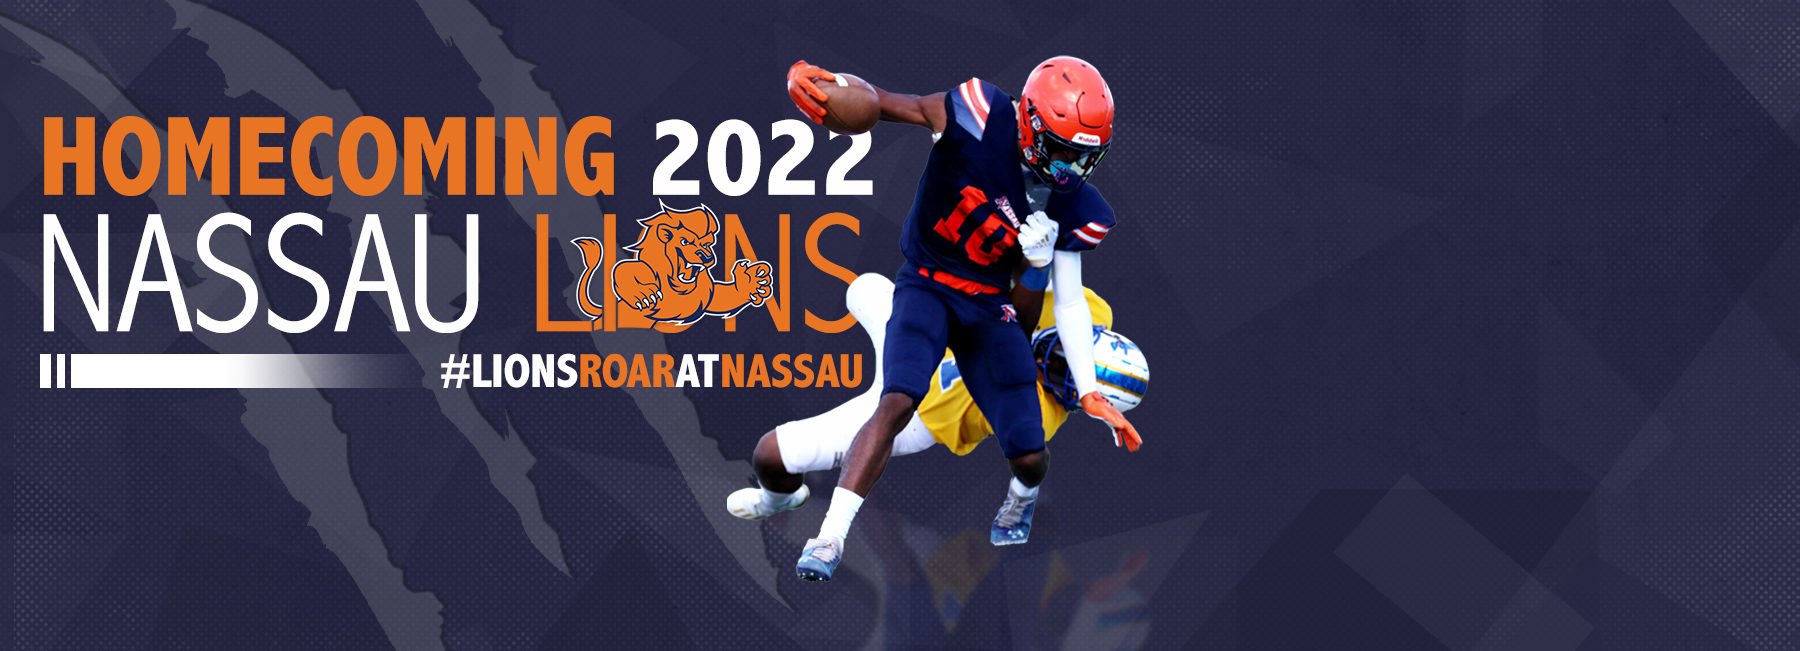 Homecoming 2022 Nassau Lions